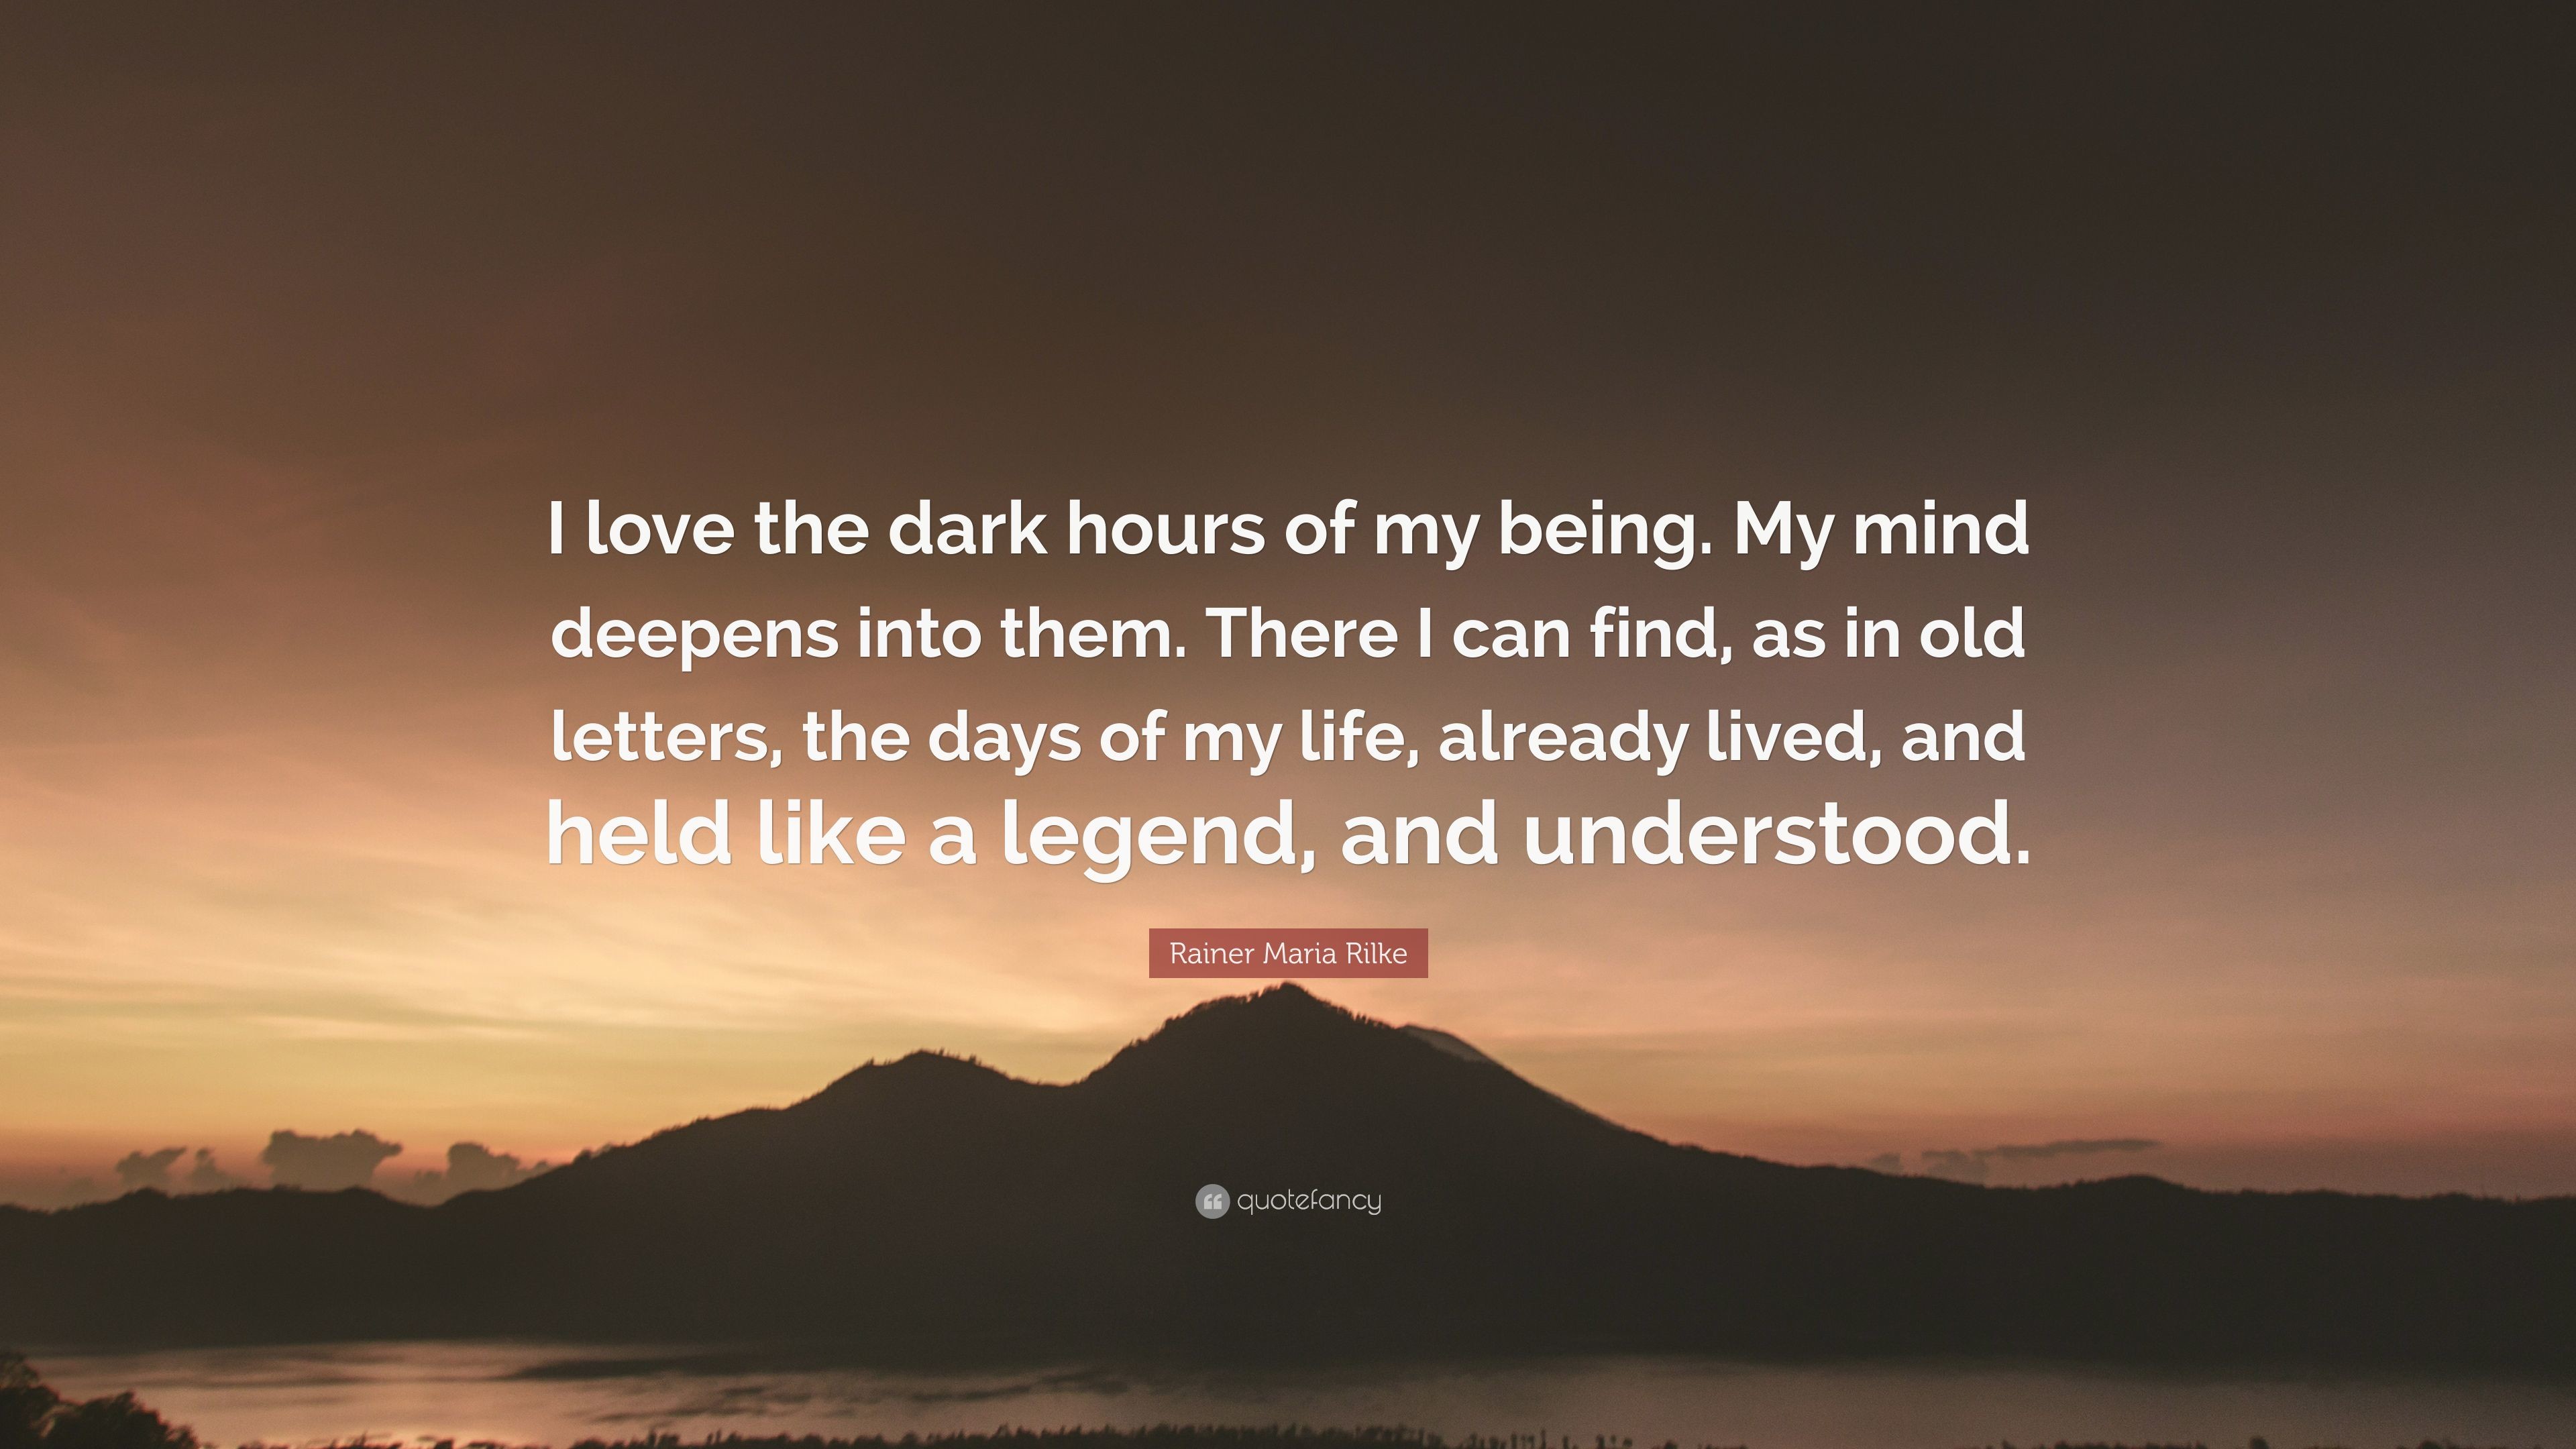 3840x2160 Rainer Maria Rilke Quote: “I love the dark hours of my being. My